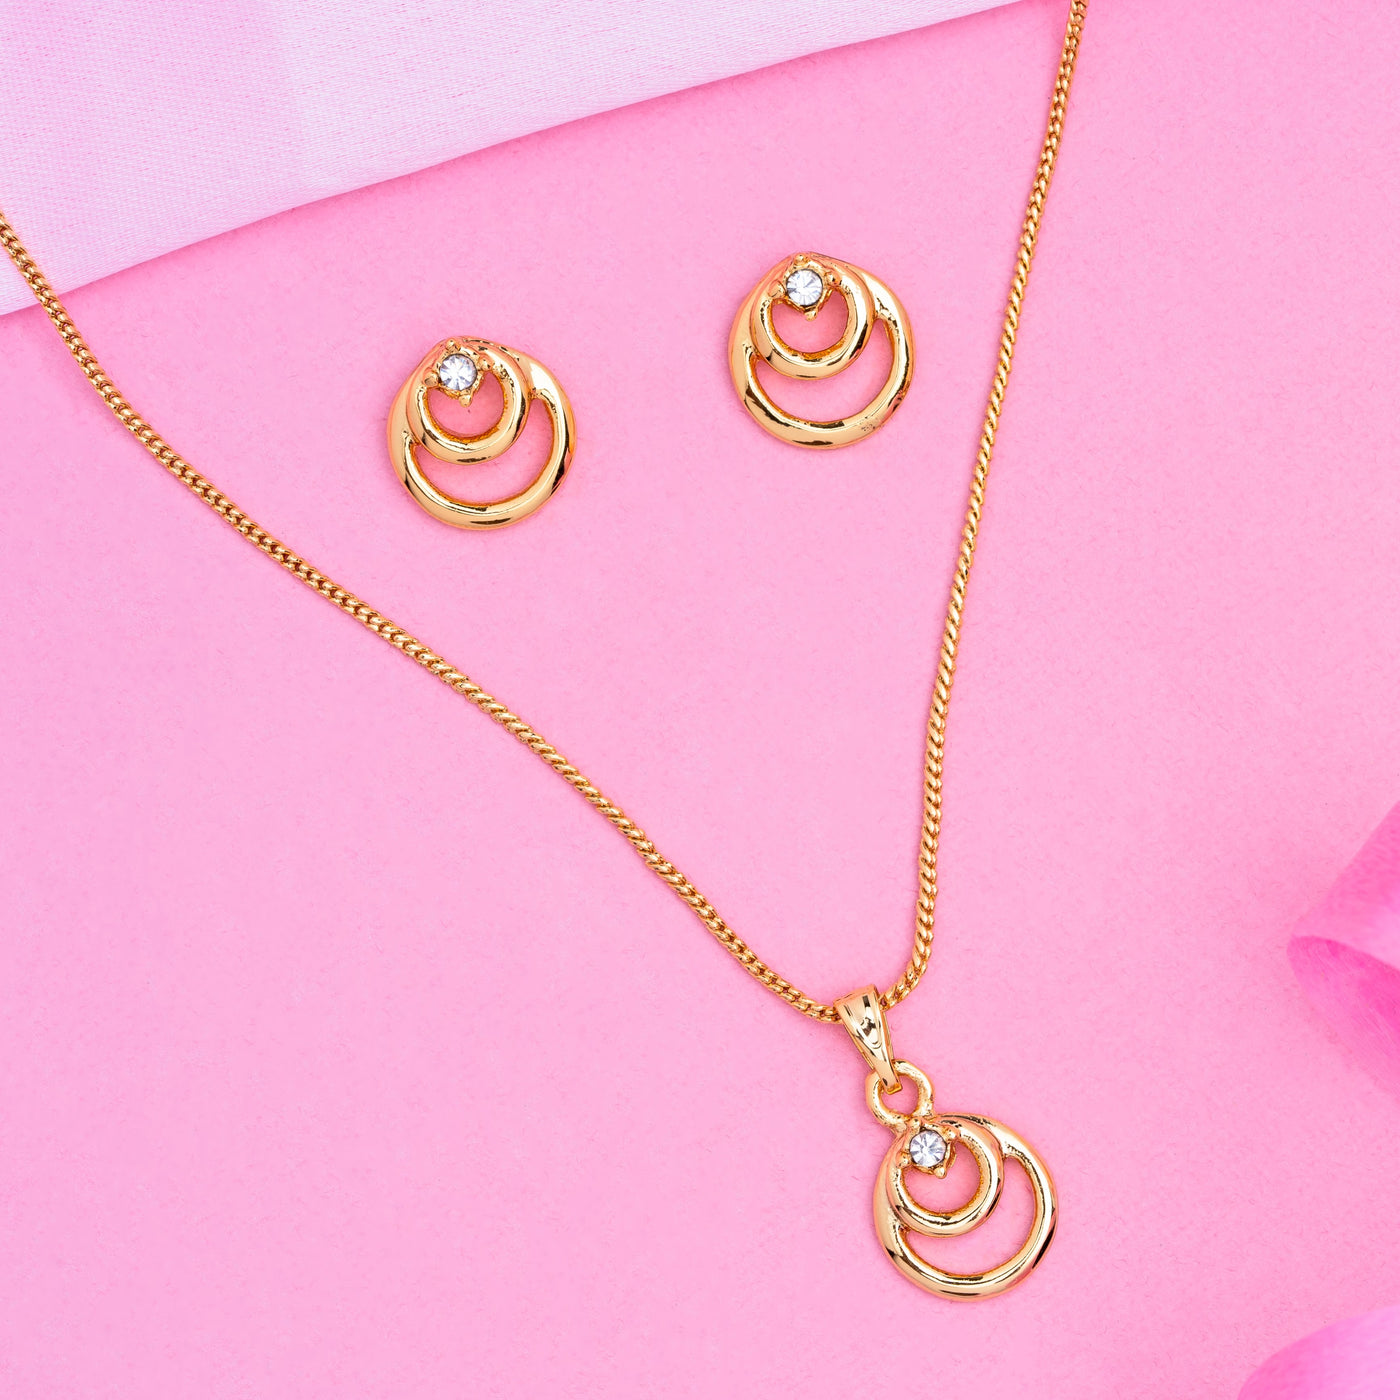 Estele 24 KT Gold Plated Spiral Diamante Pendant Set for Women / Girls